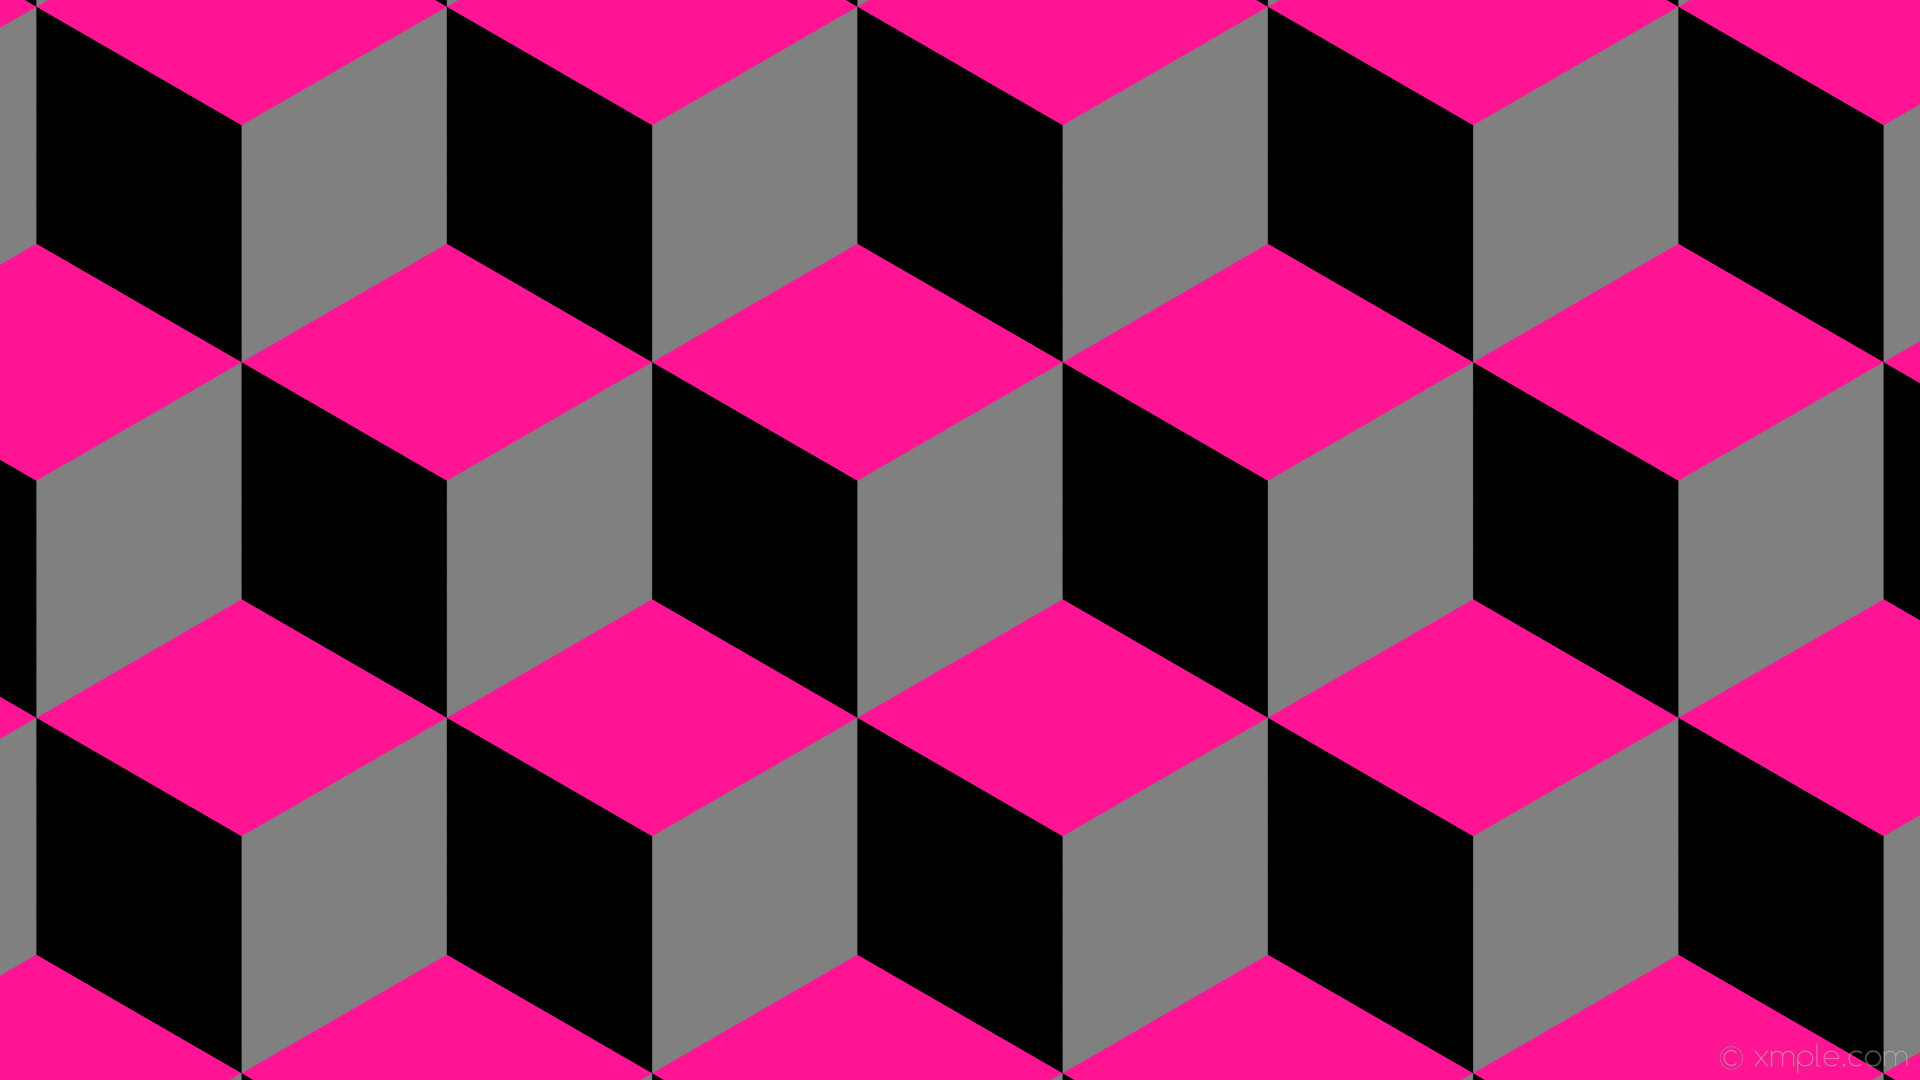 1920x1080 wallpaper pink 3d cubes black grey gray deep pink #808080 #ff1493 #000000  240